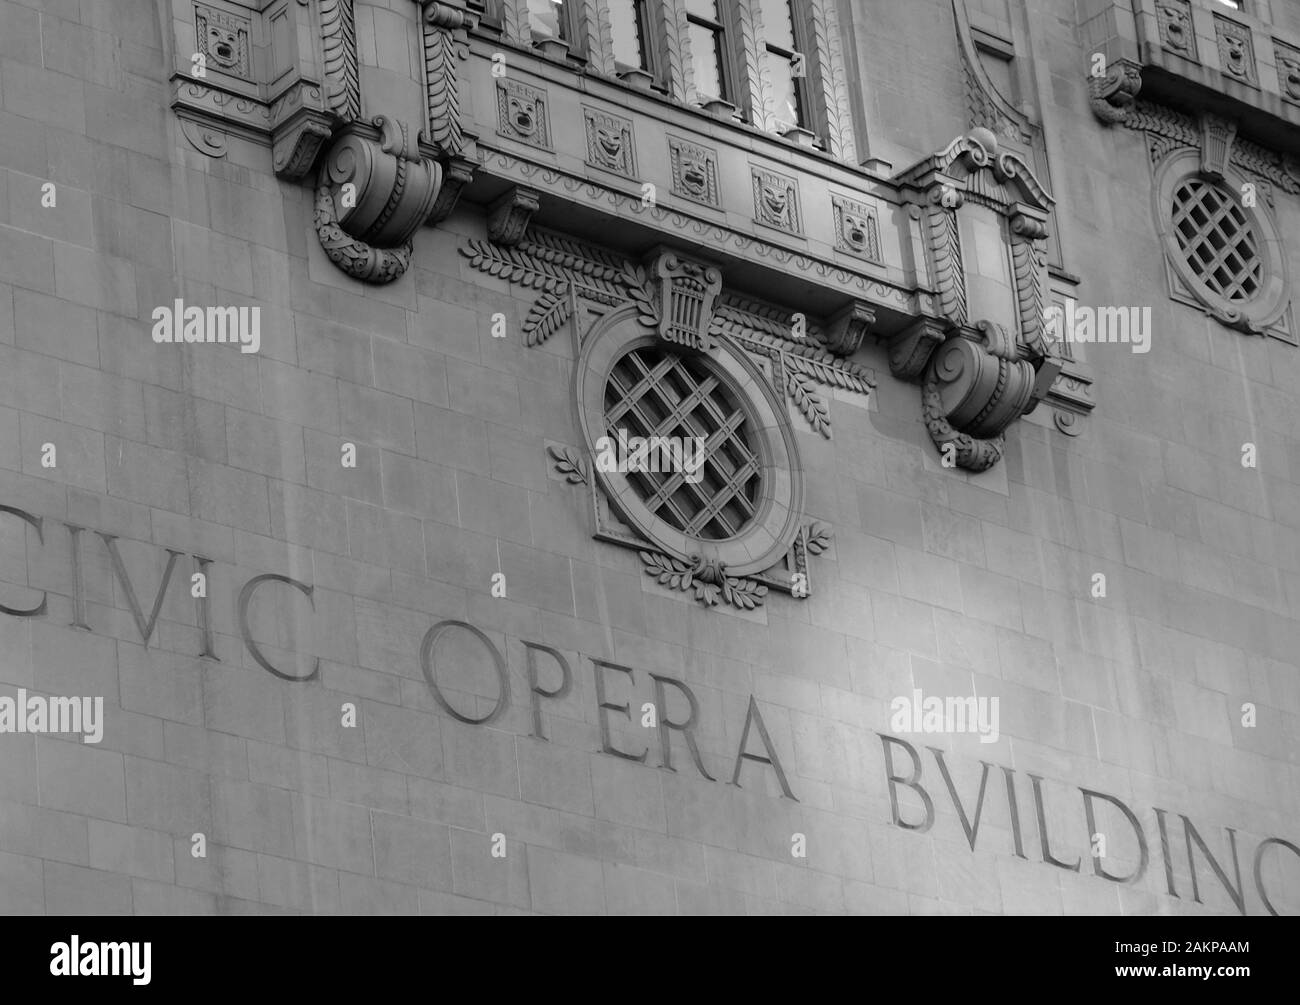 Civic Opera Building Banque D'Images